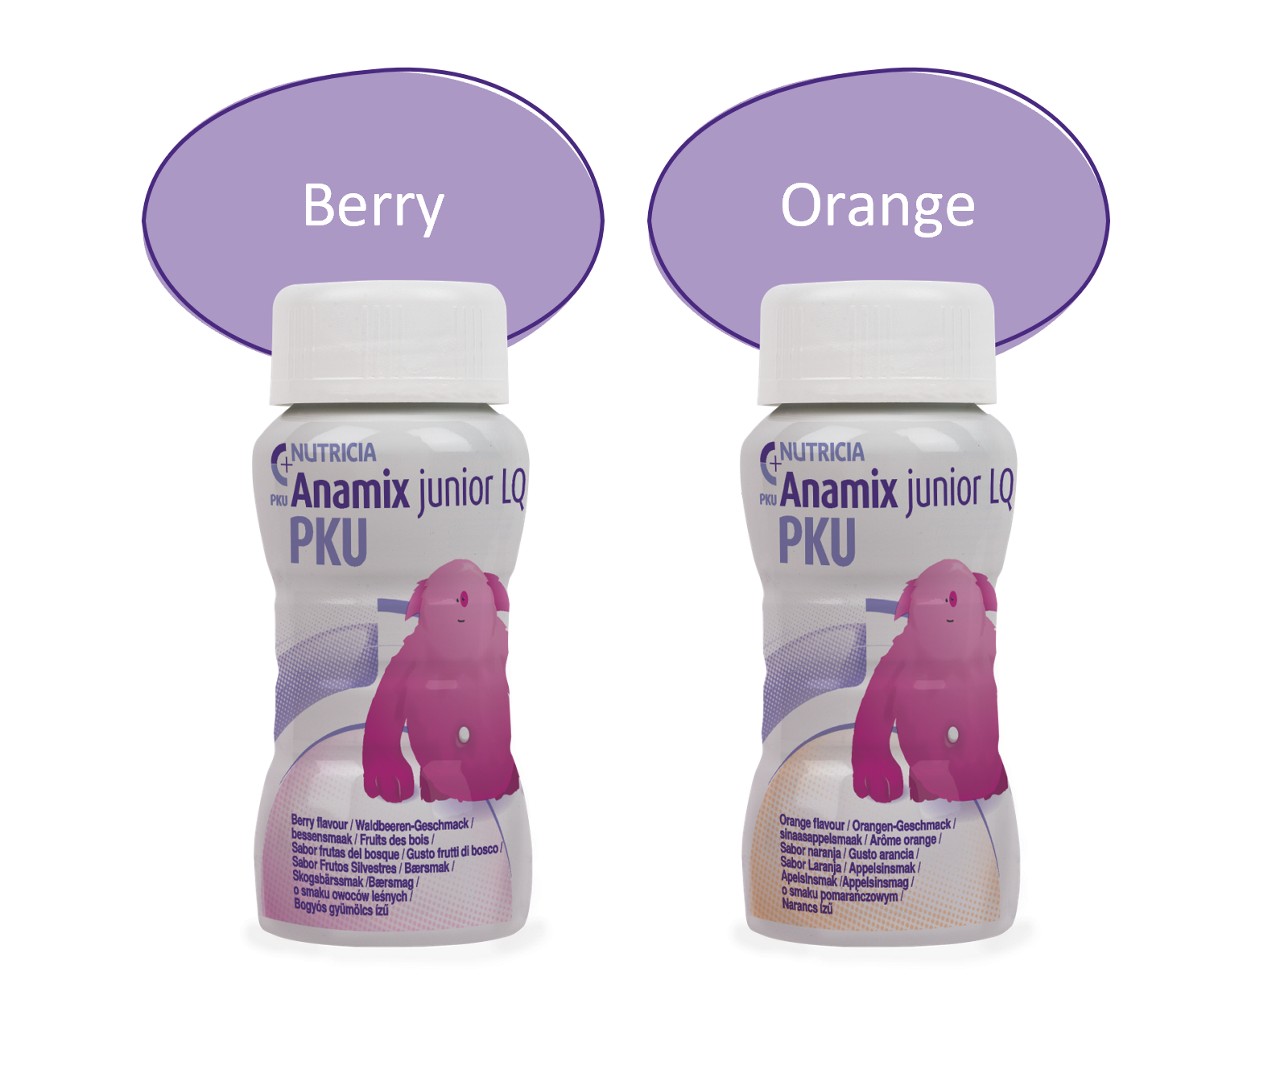 Anamix Junior LQ  berry and orange flavours